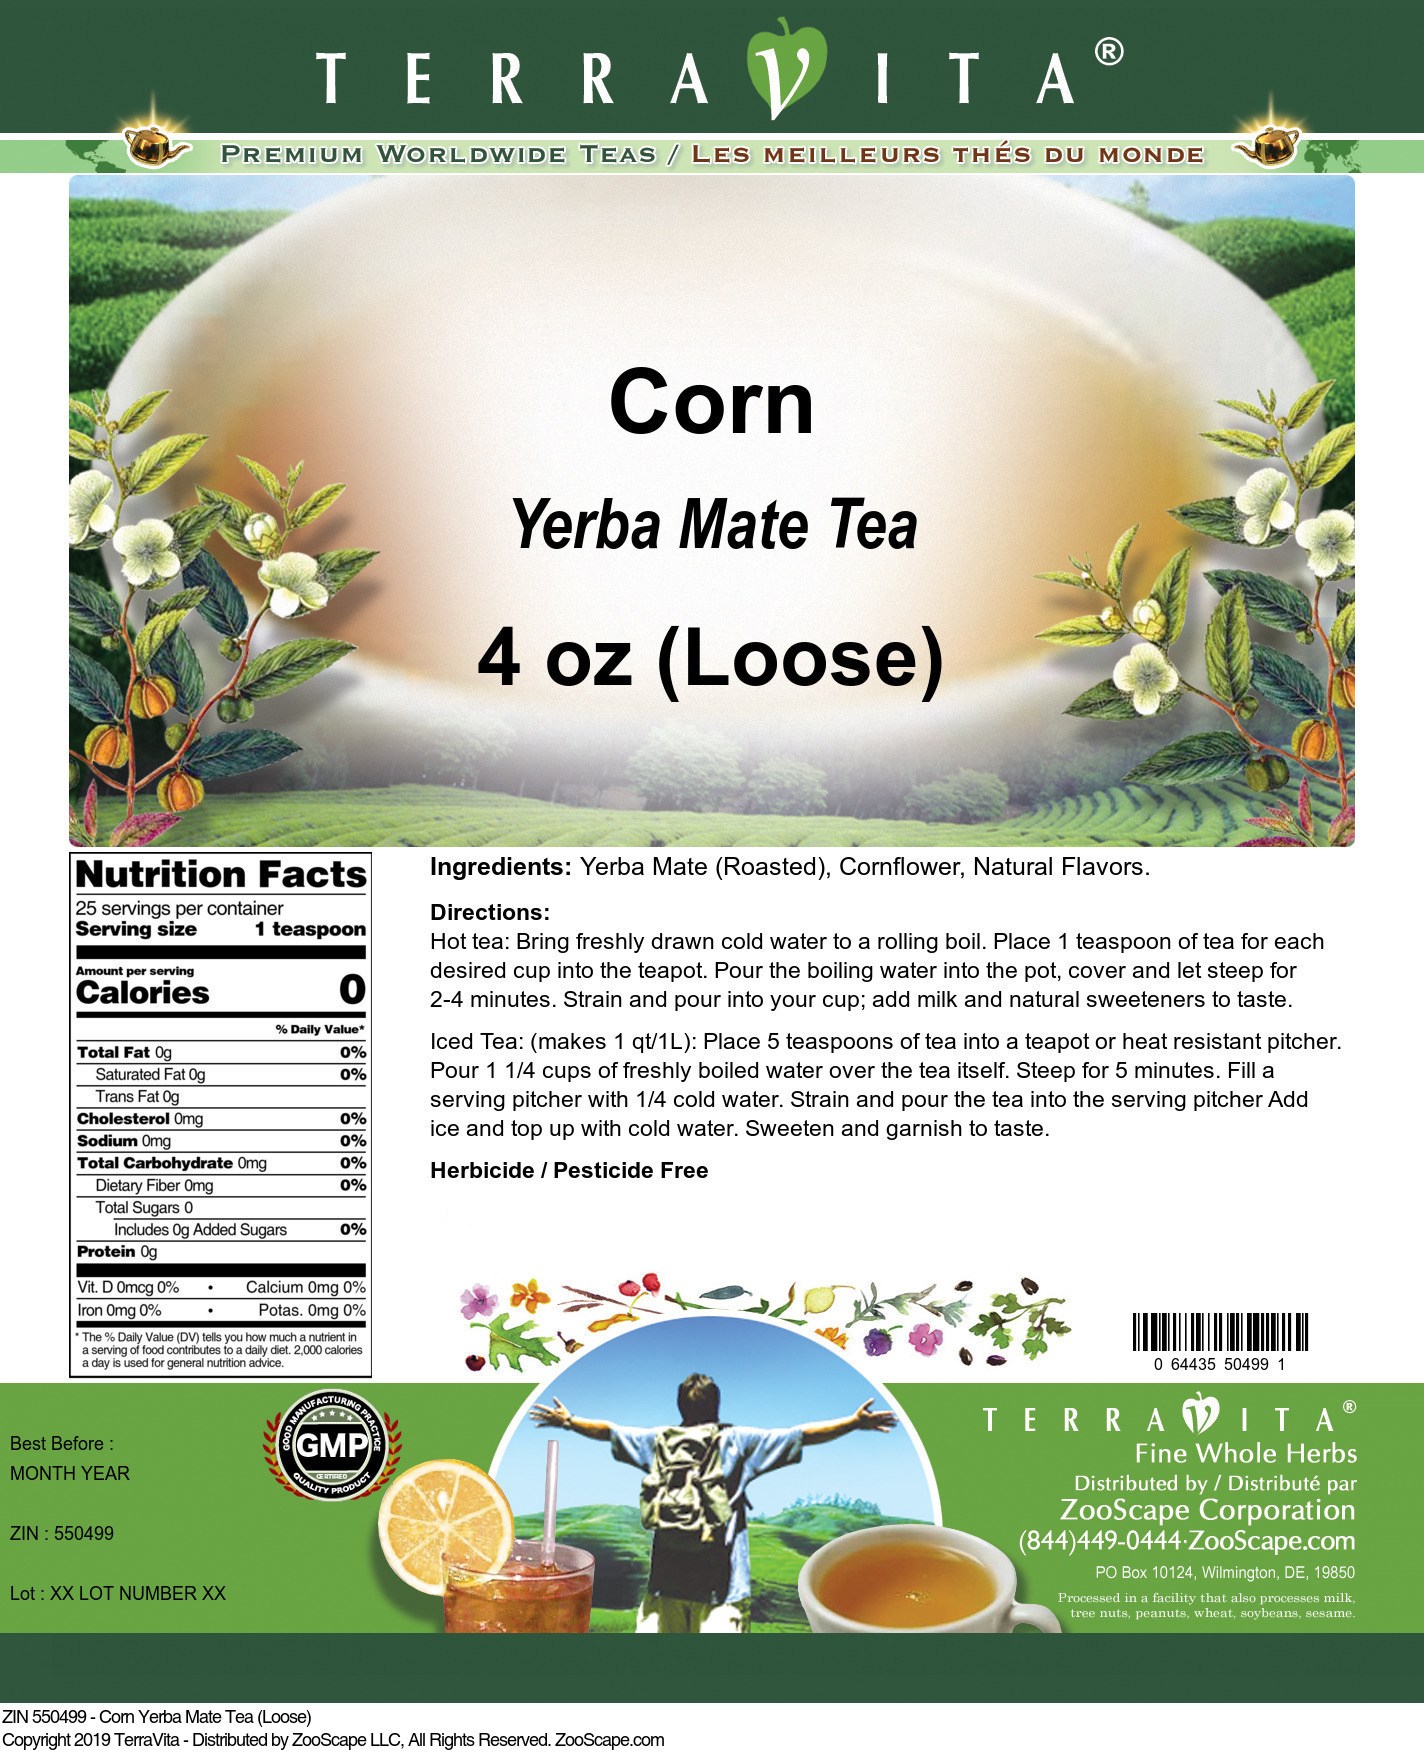 Corn Yerba Mate Tea (Loose) - Label